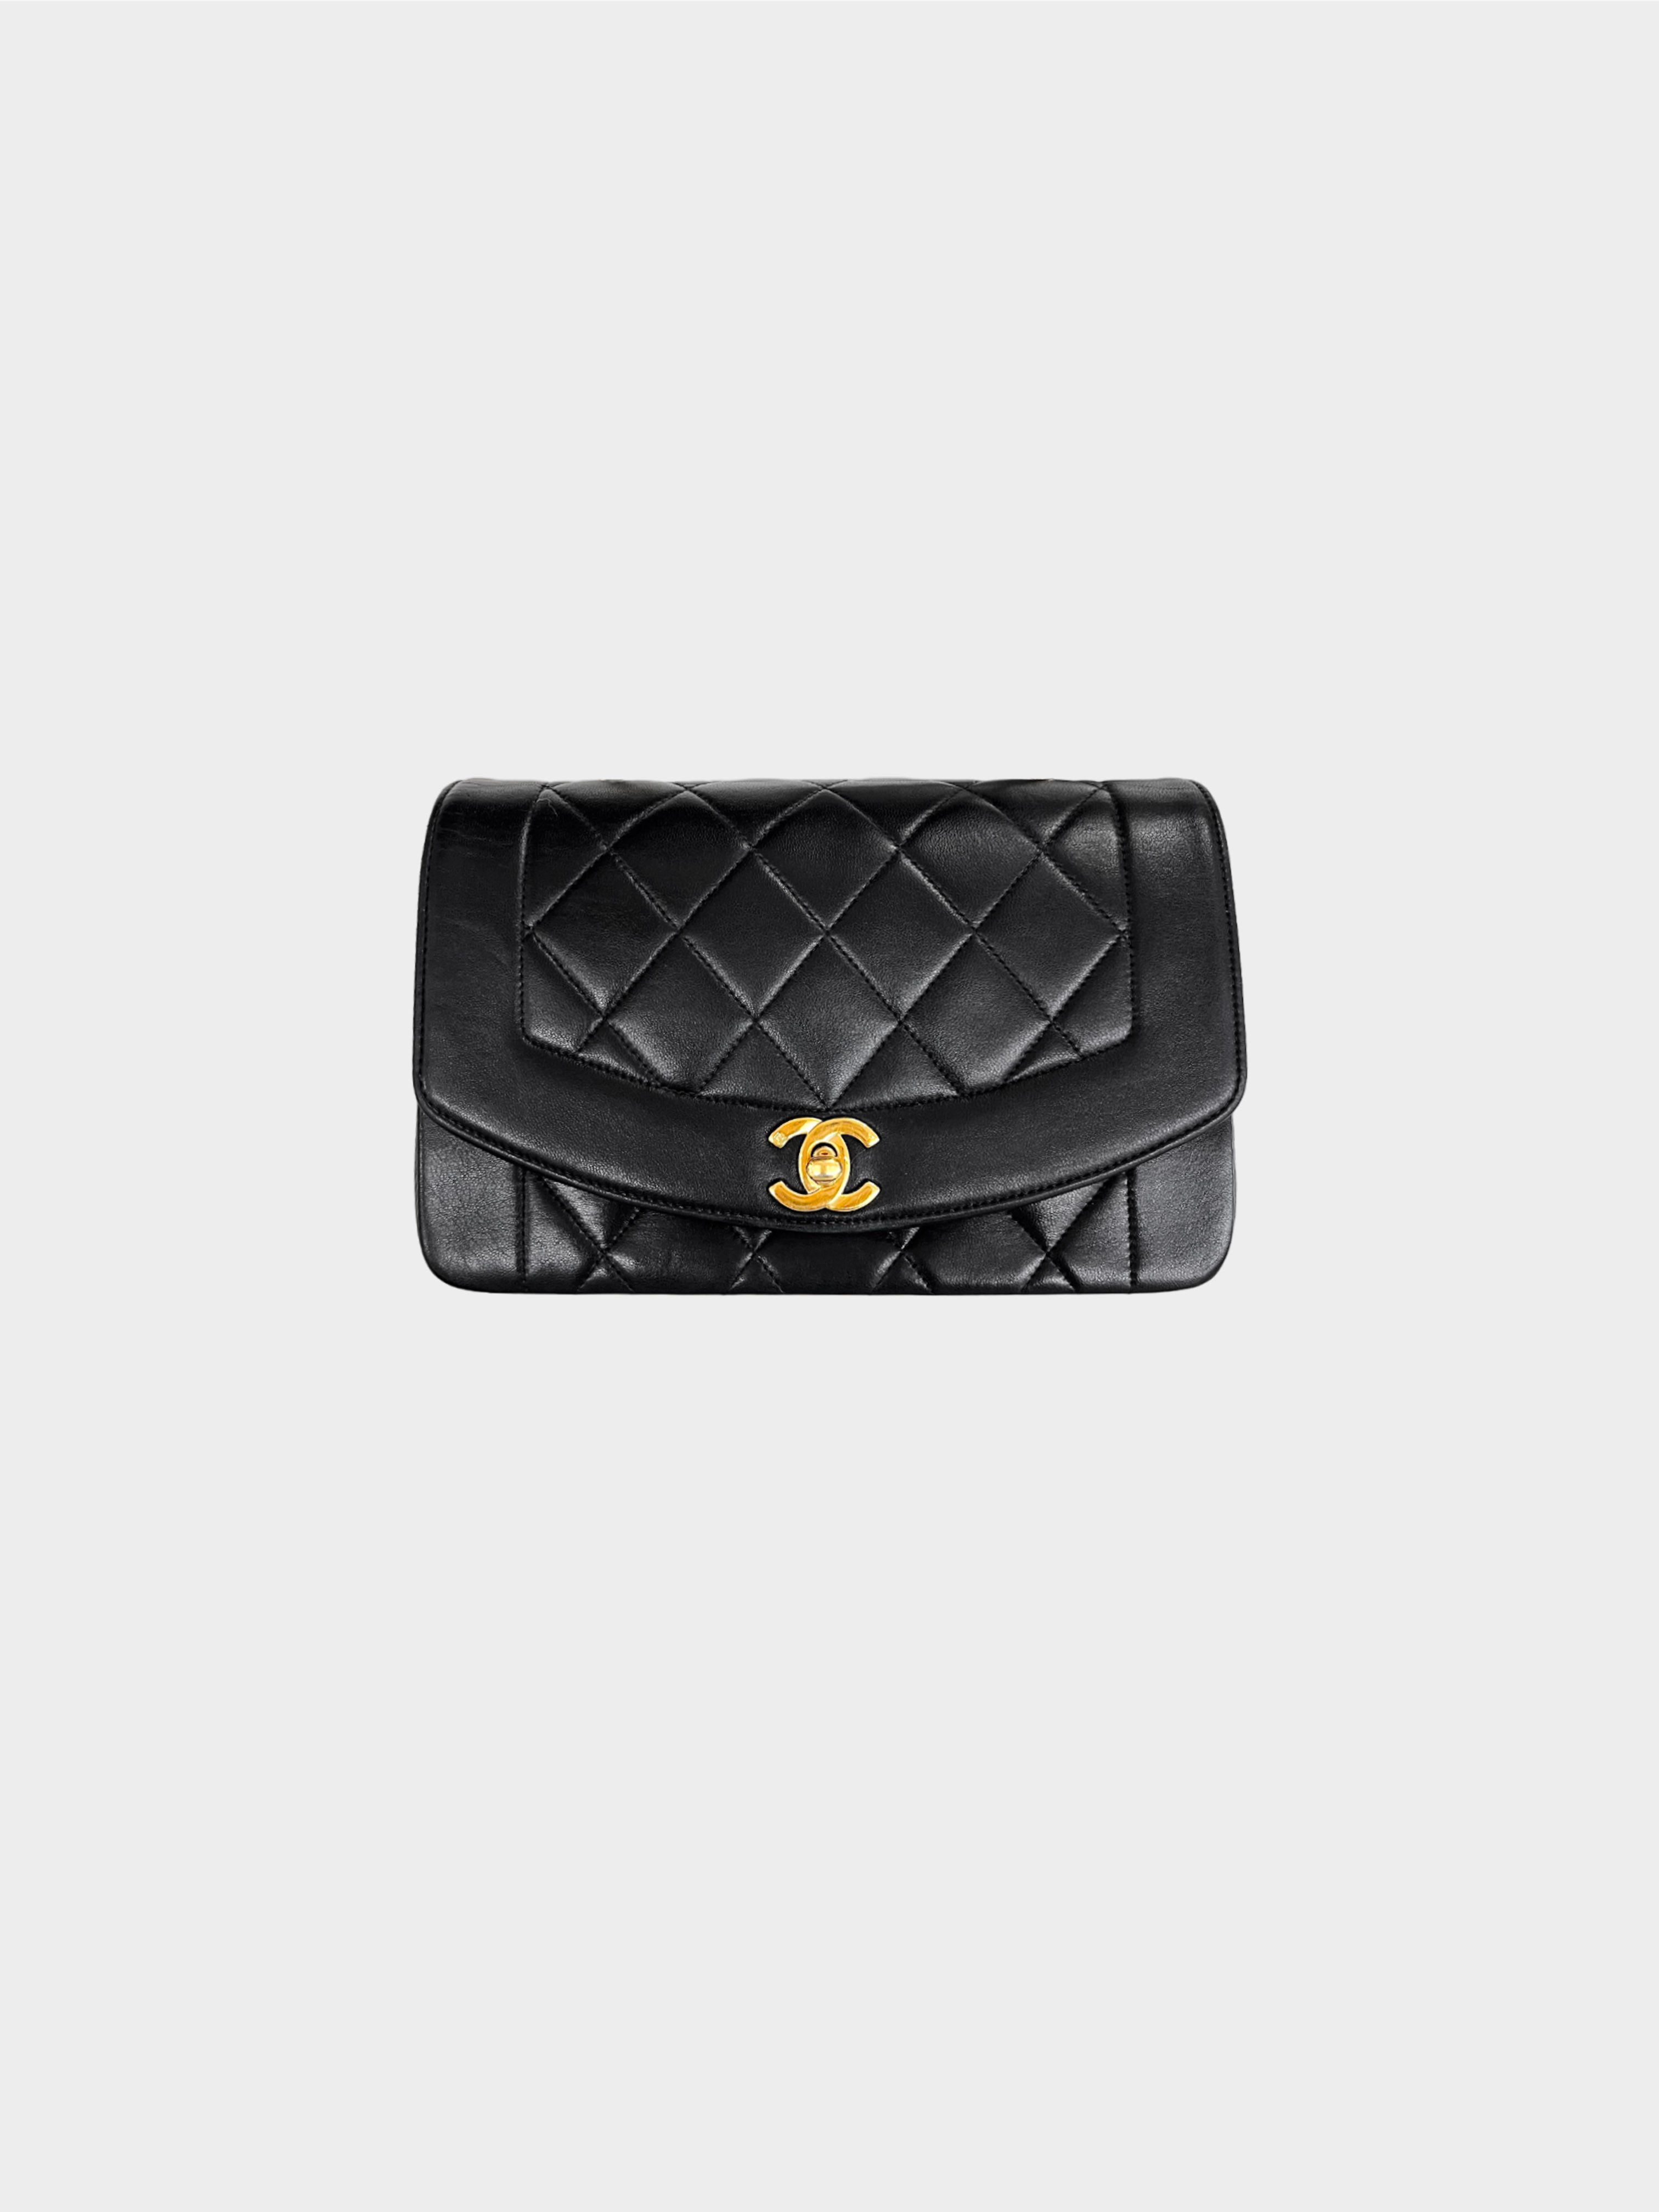 Chanel 1996 Black Lambskin Small Diana Flap Bag